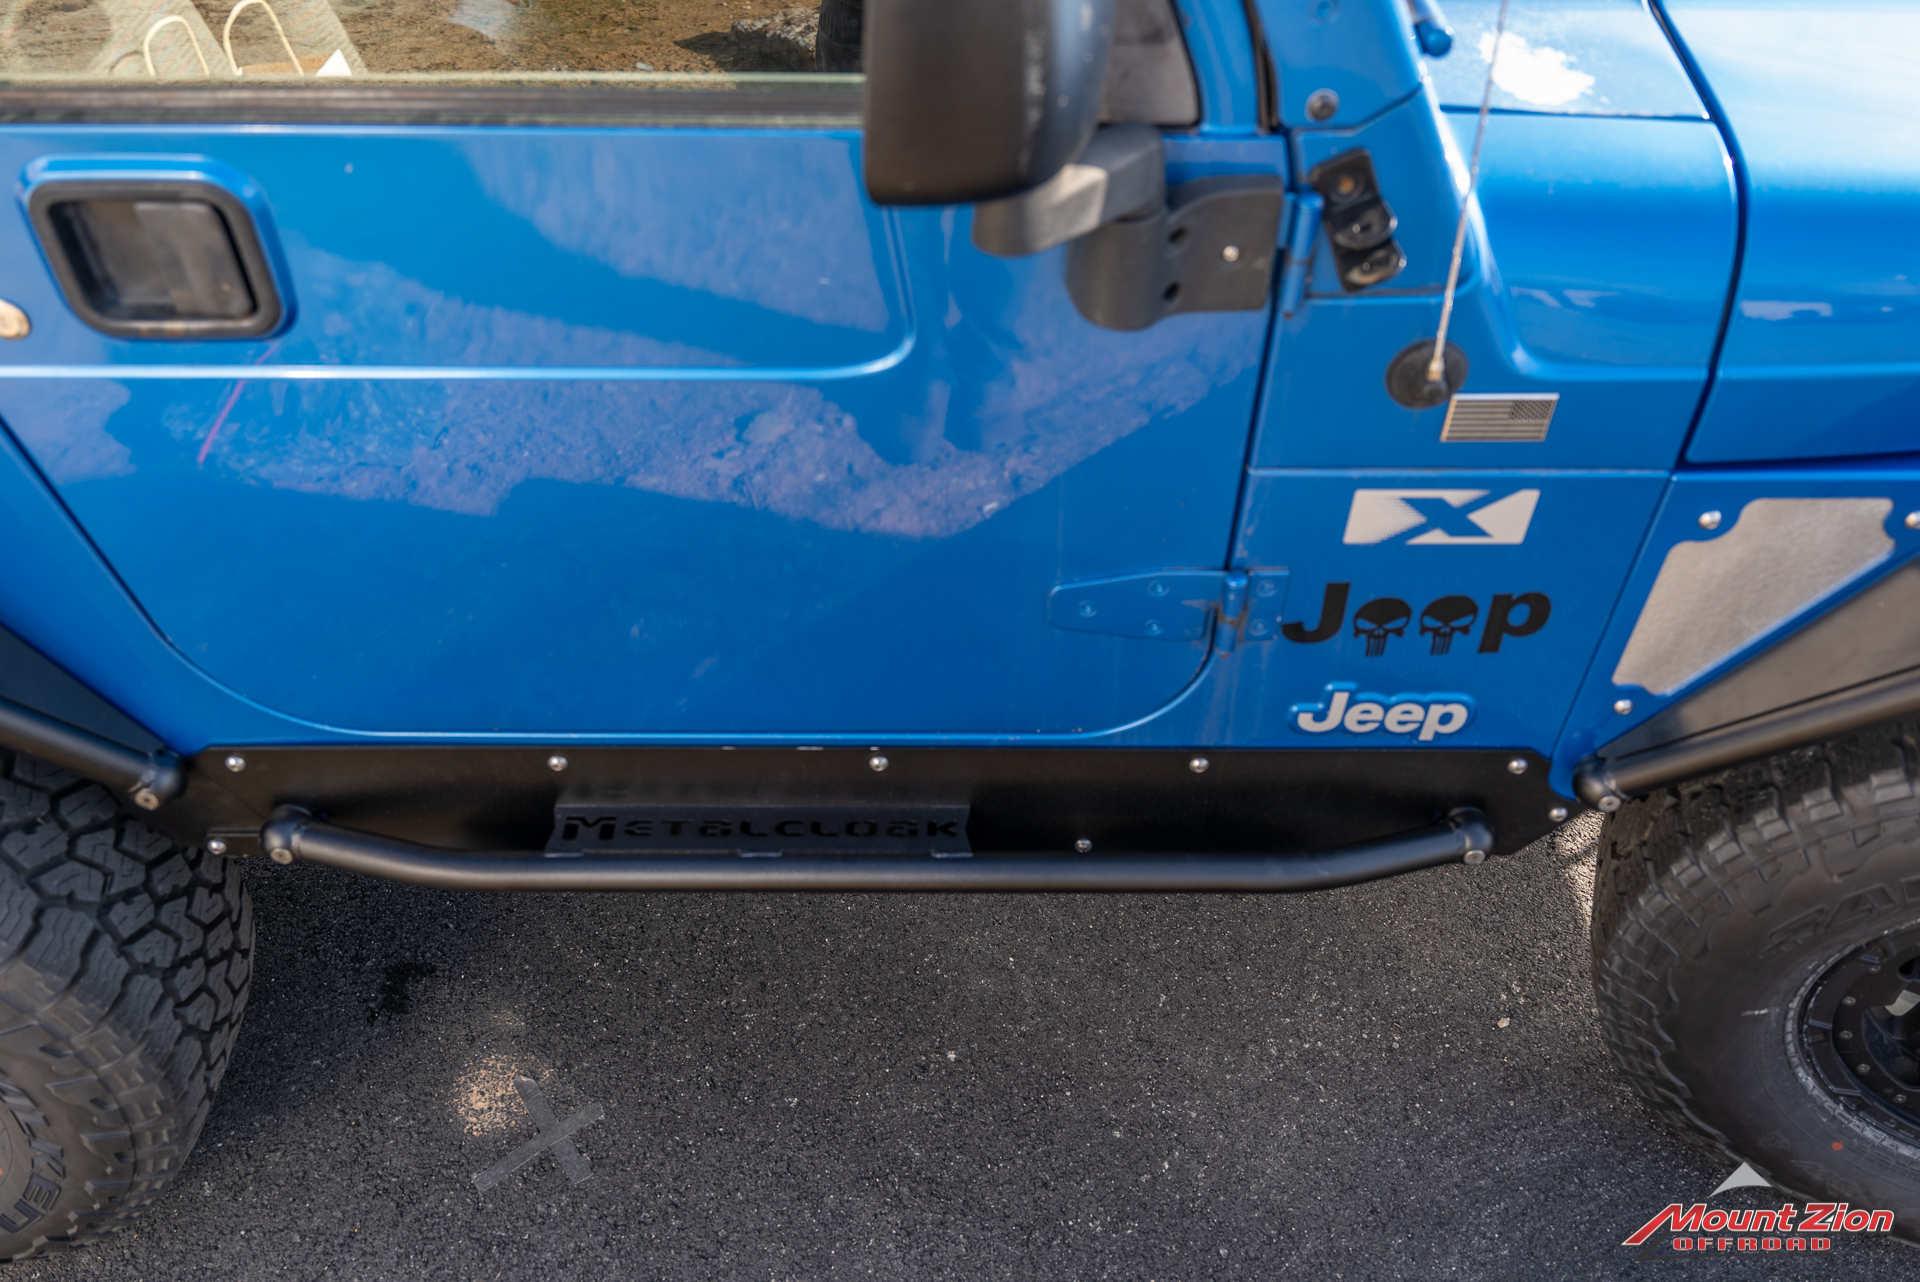 2003 Jeep Wrangler - Intense Blue - Mount Zion Offroad